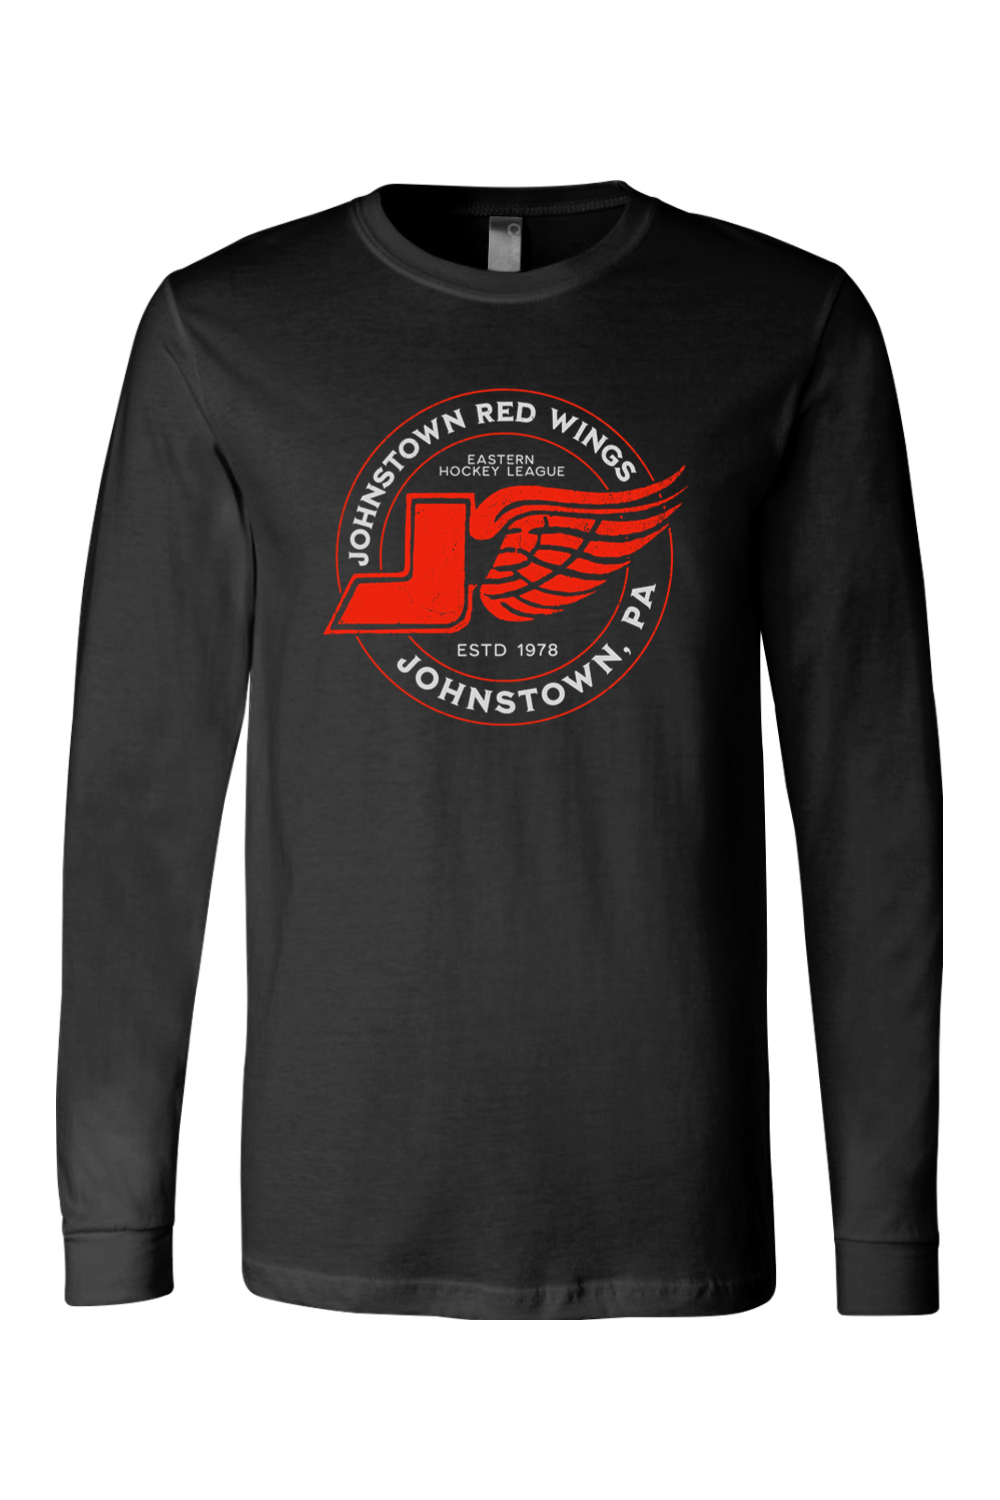 Johnstown Red Wings Hockey - Long Sleeve Tee - Yinzylvania